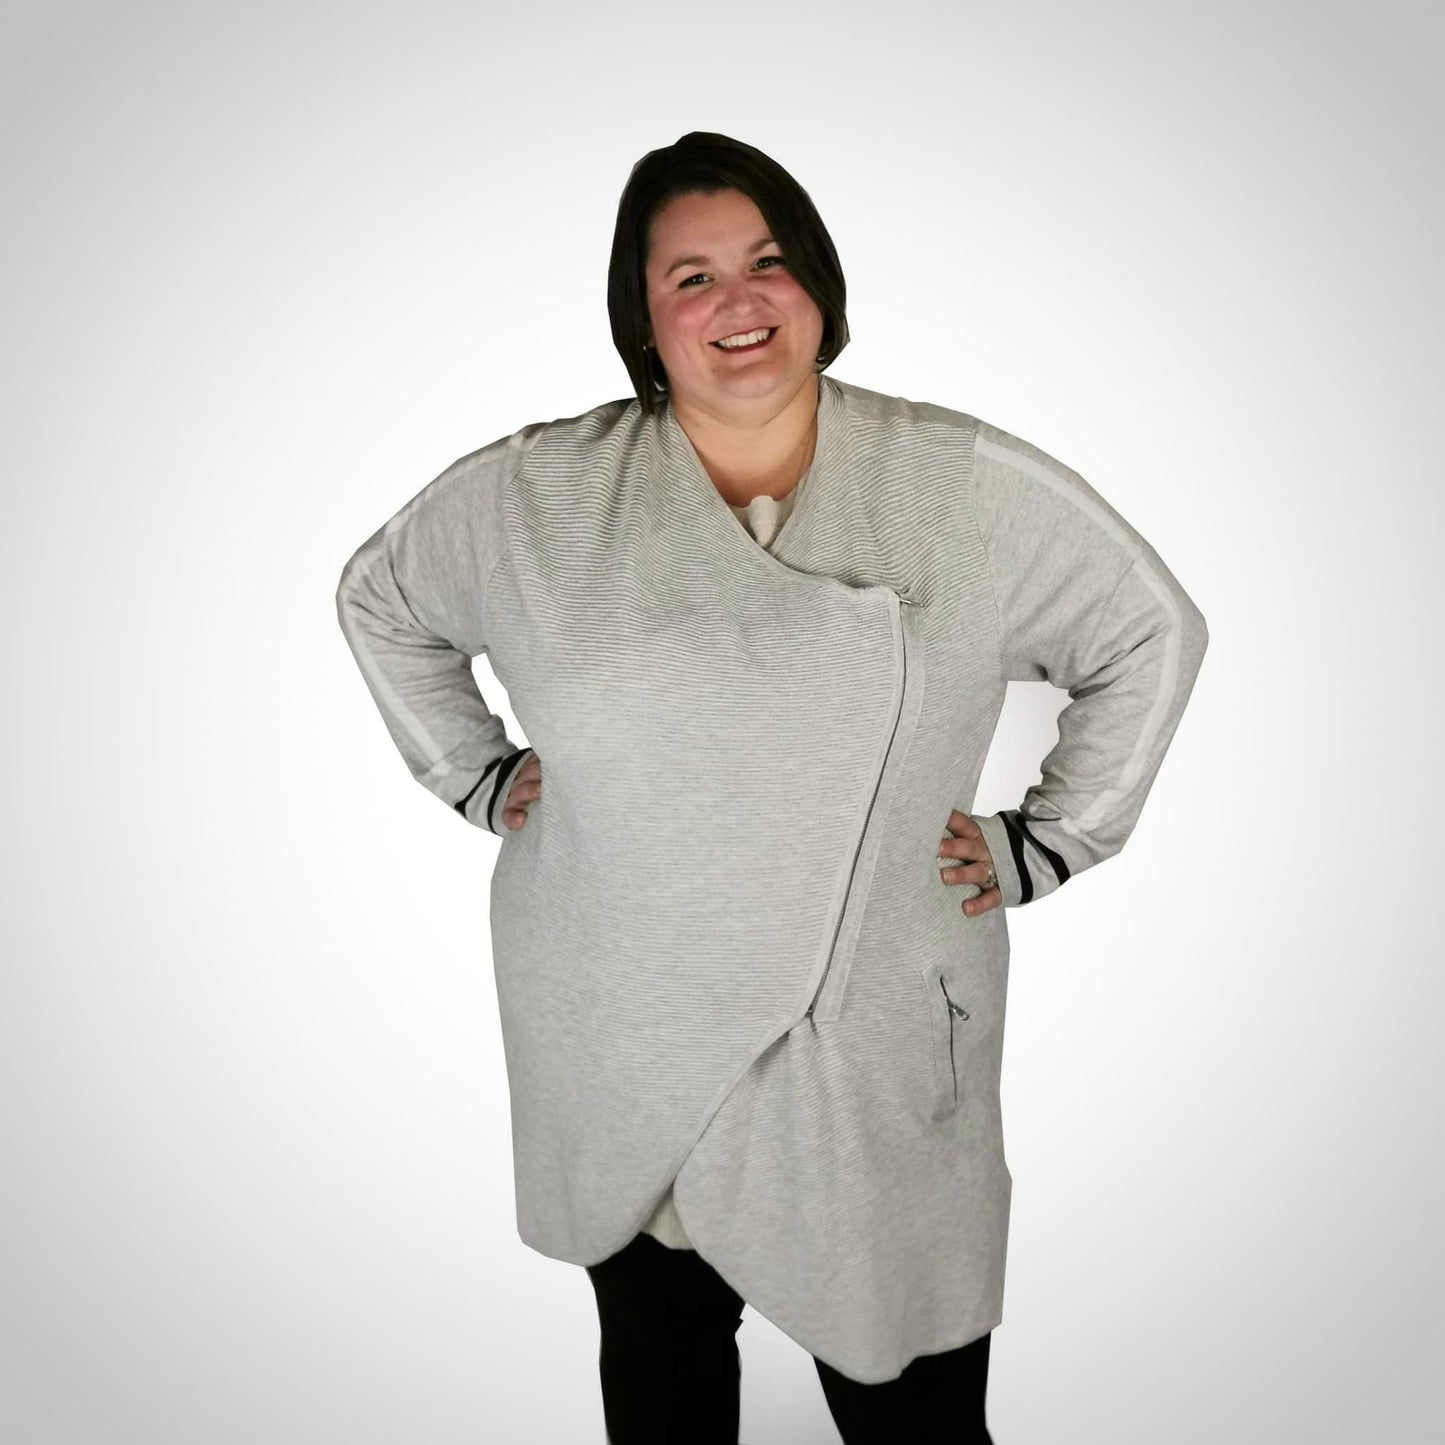 Asymmetrical gray knit jacket